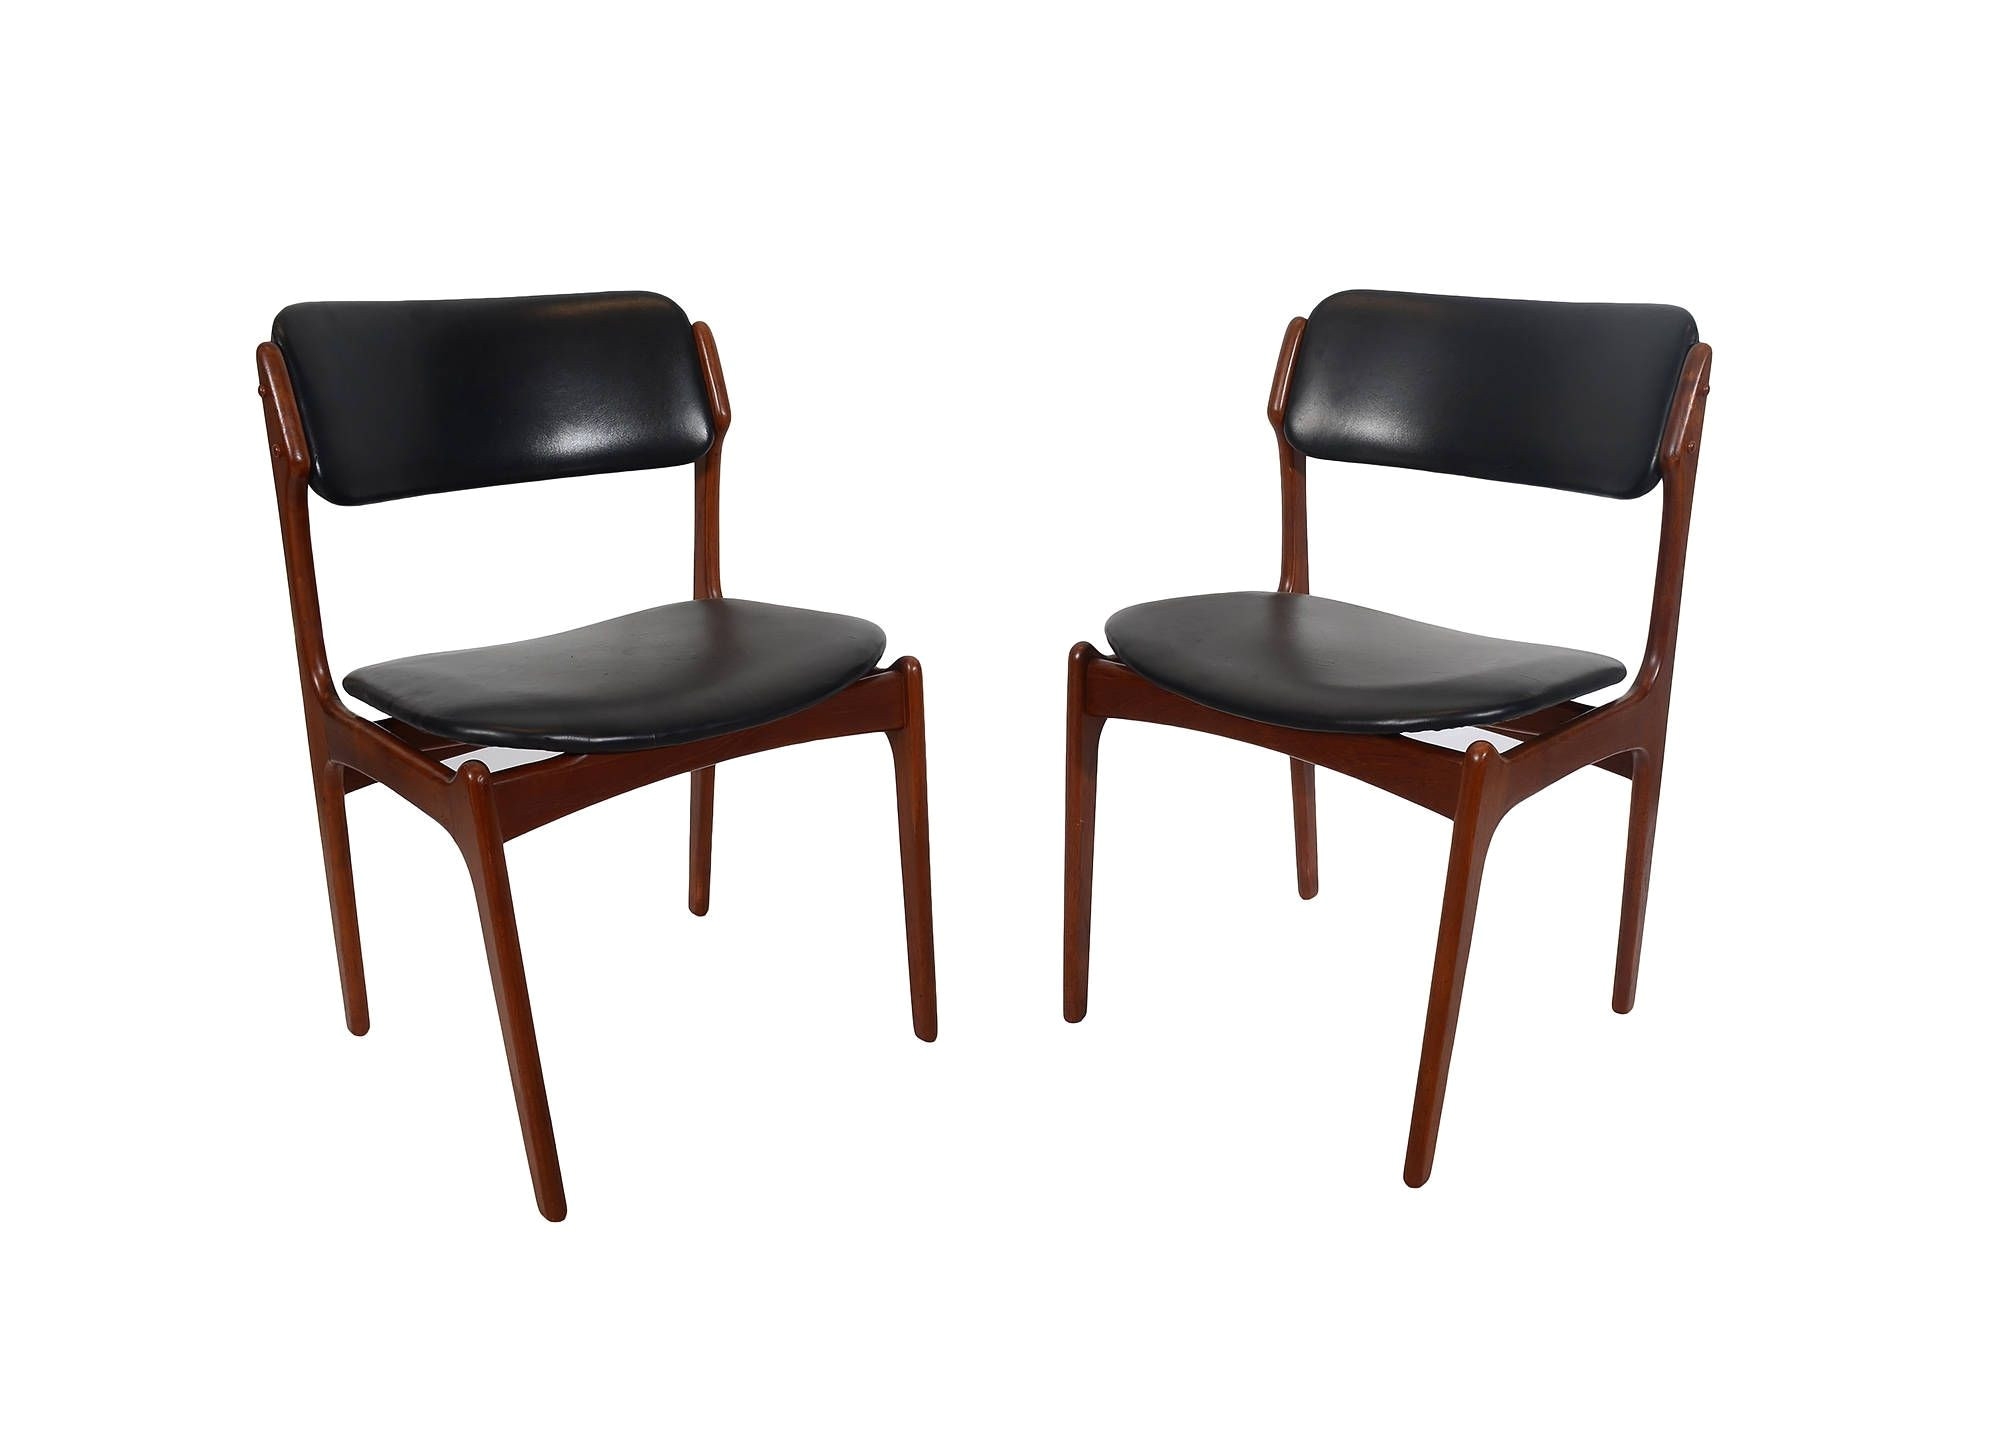 Portable Massage Chair Costco Folding Wooden Chairs Costco